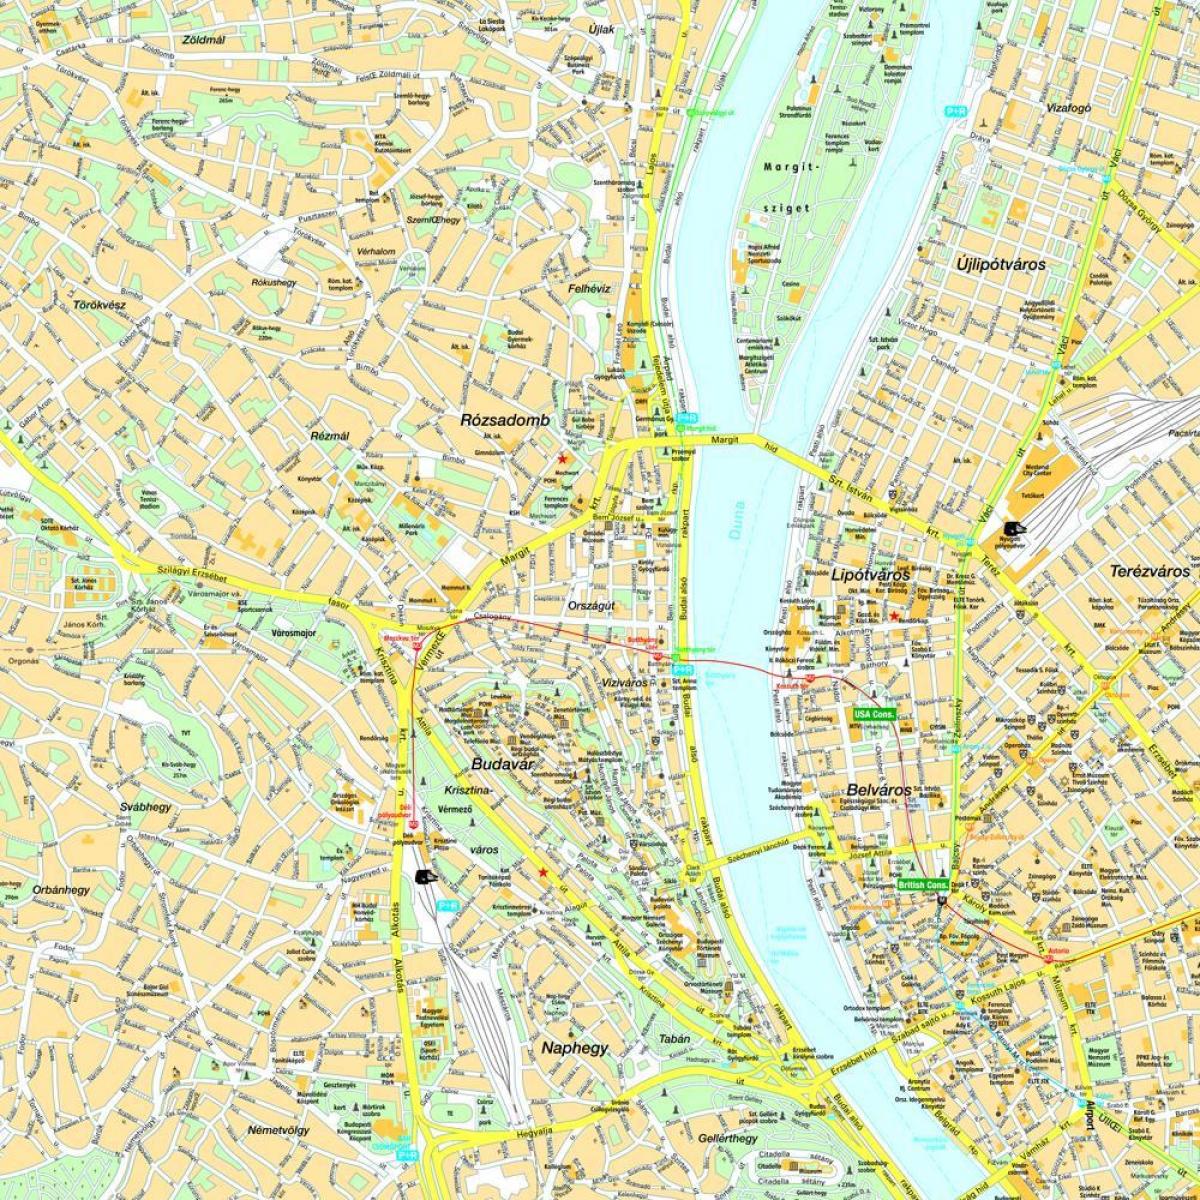 budapest peta pusat